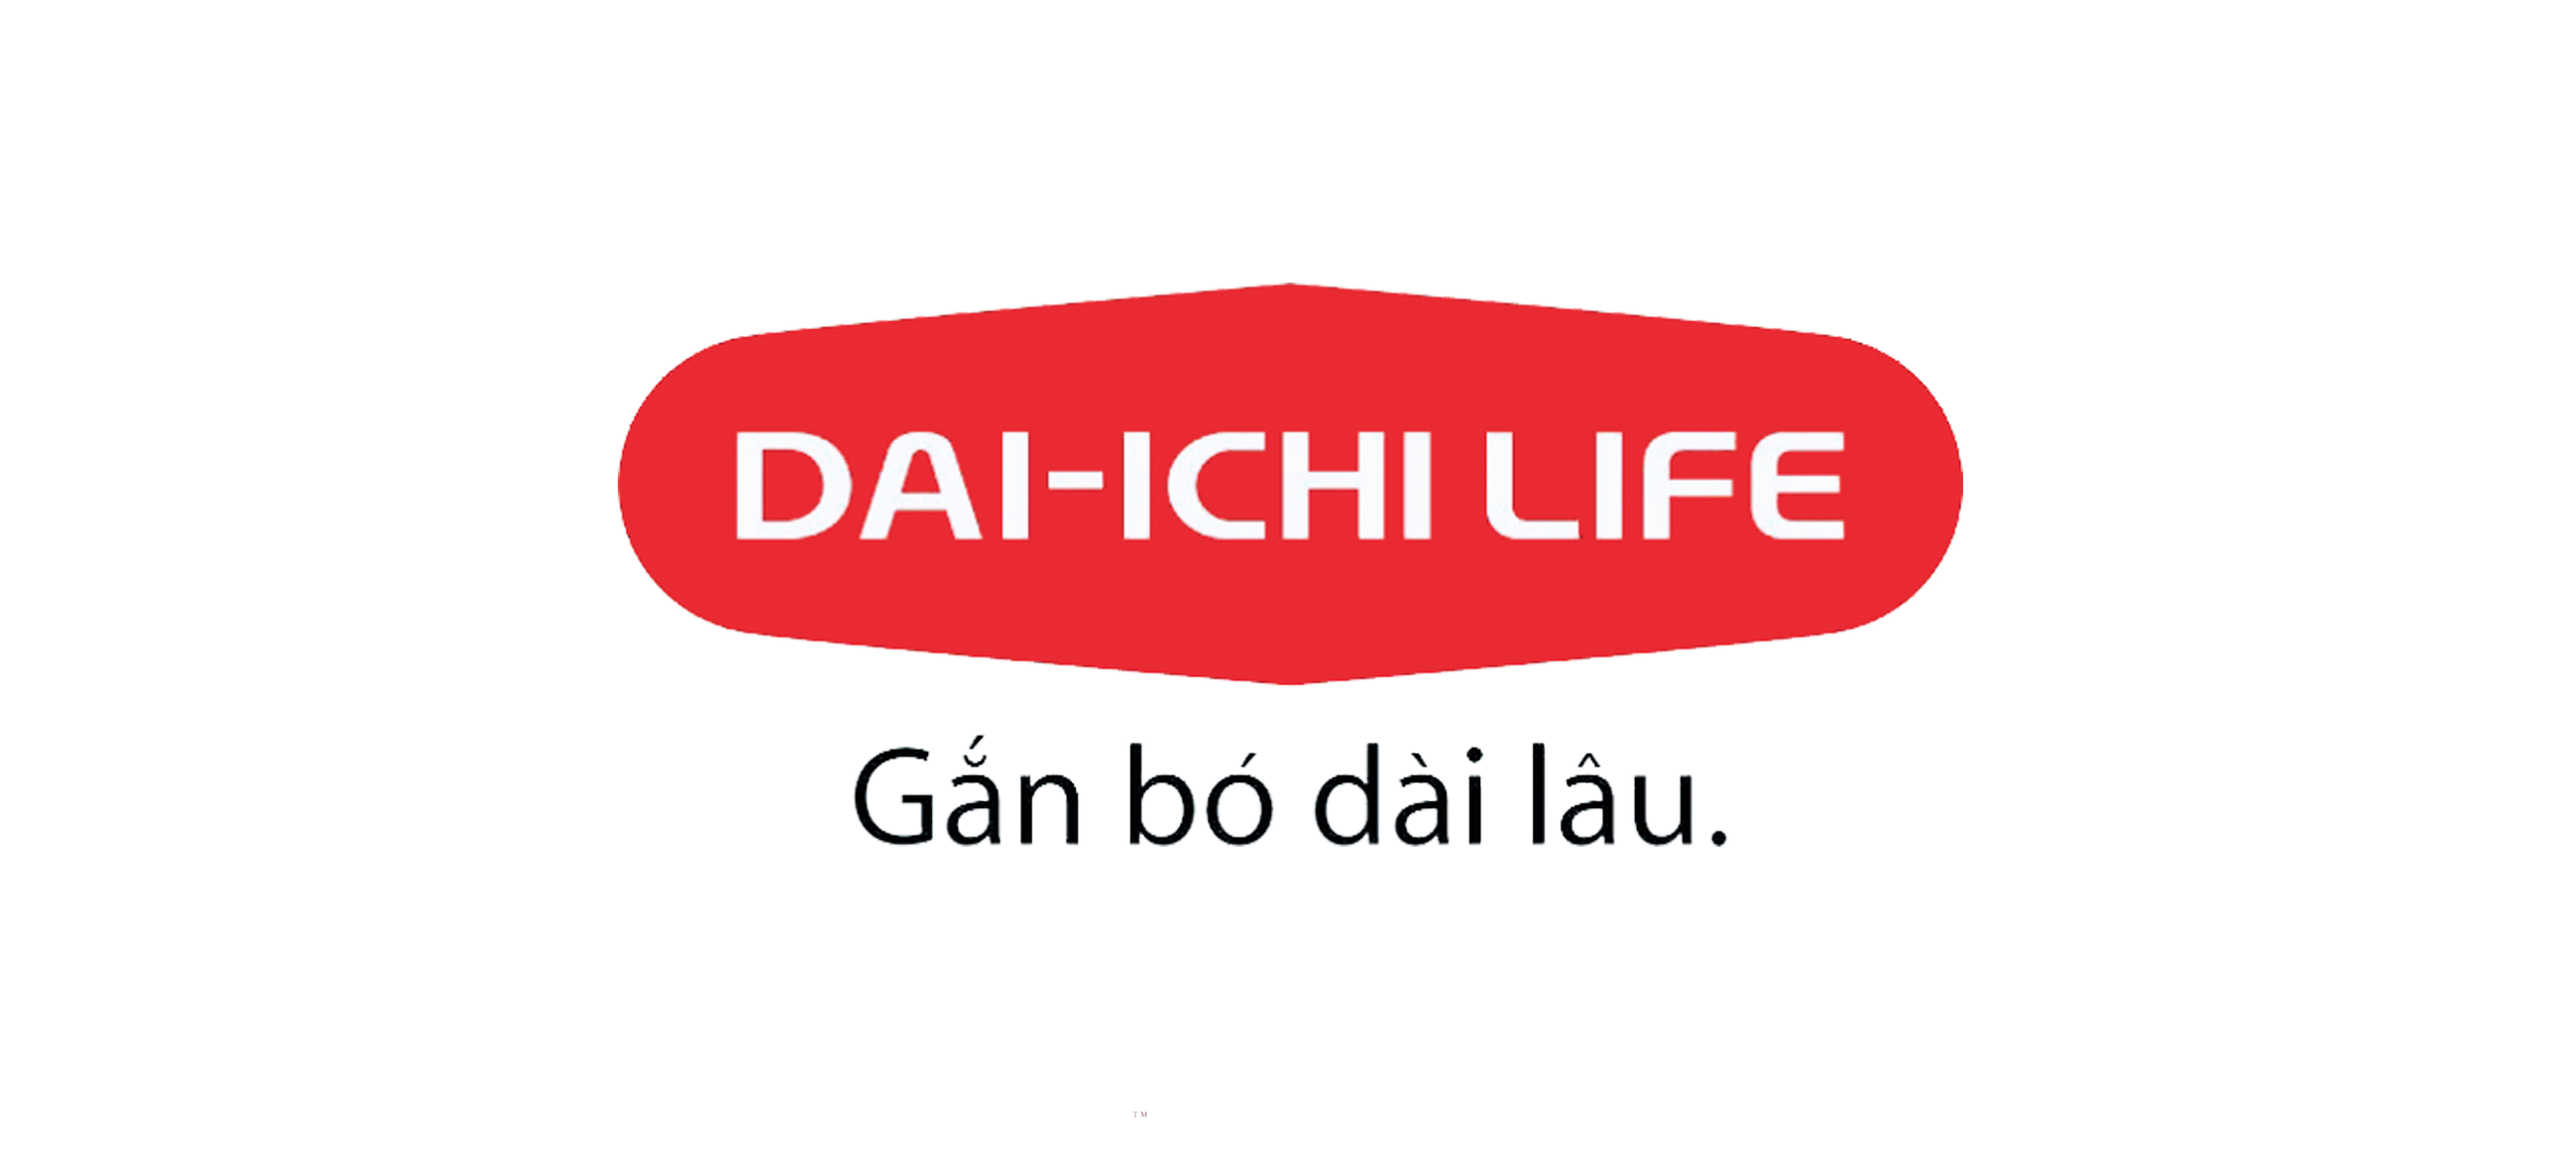 Dai-ichi Life